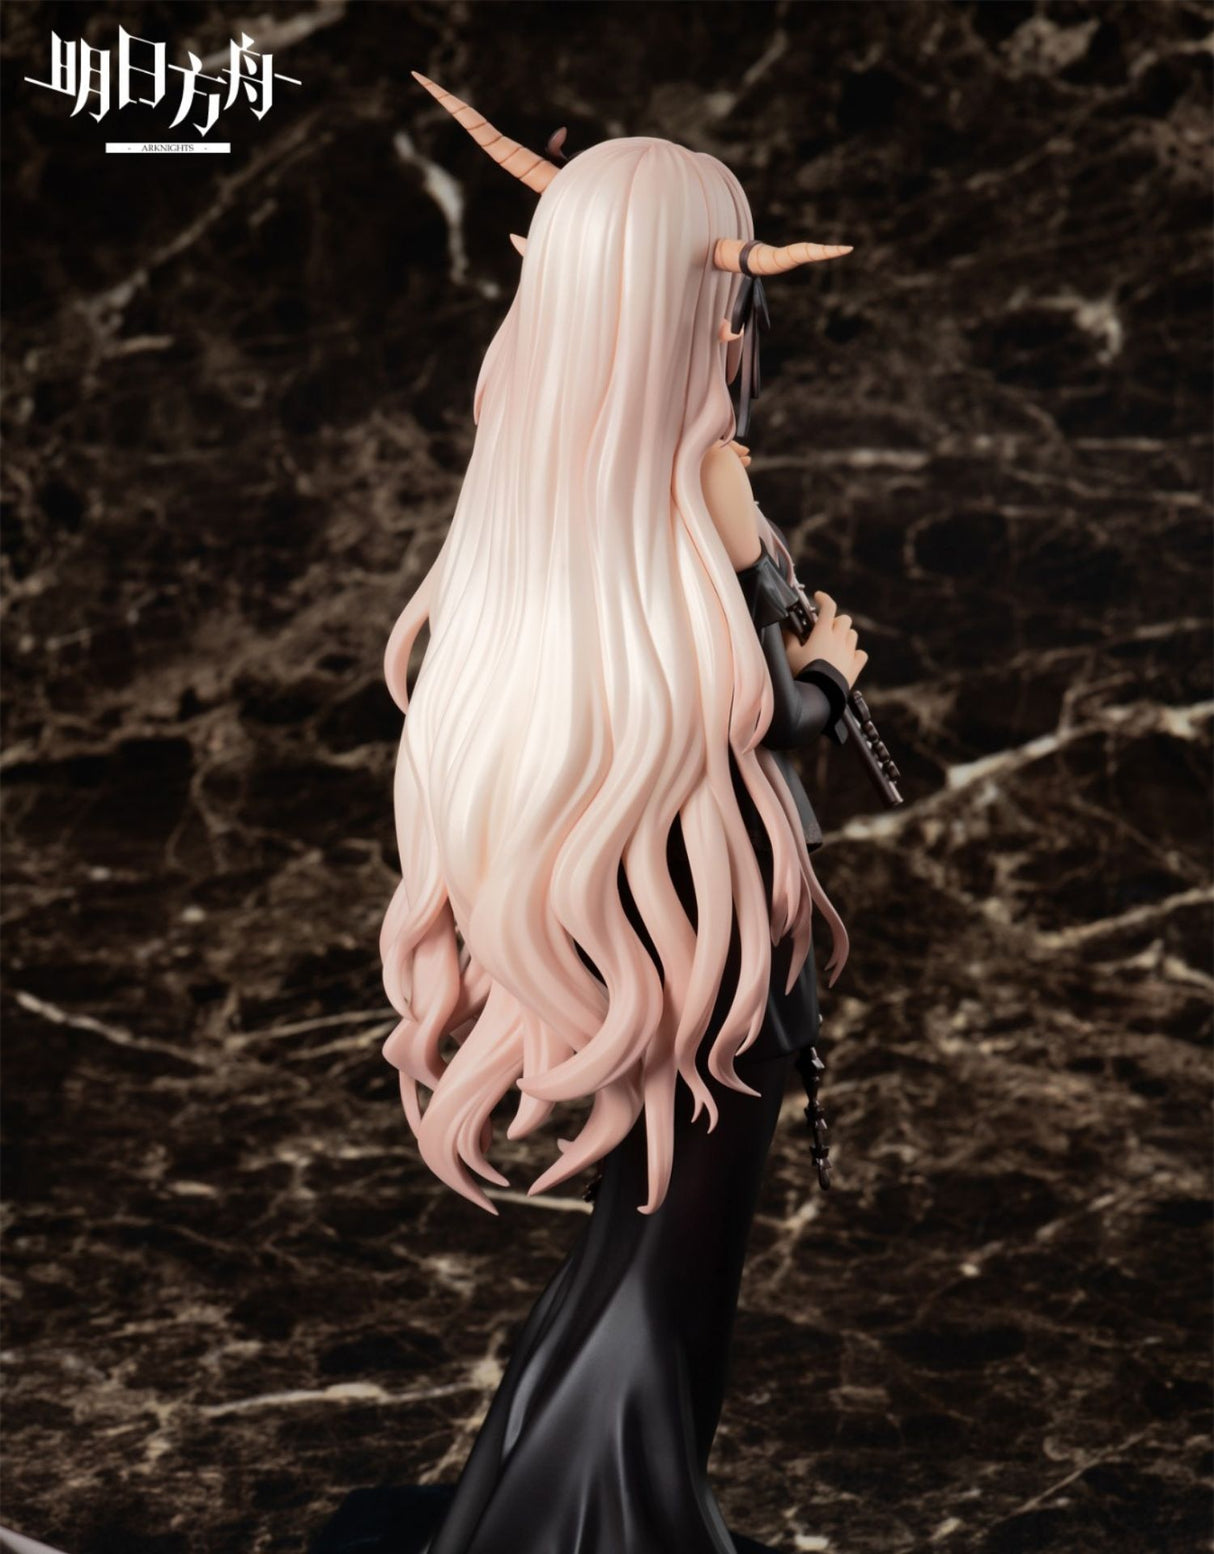 Arknights: Shining's Serenade - Exclusive Handcrafted Figure